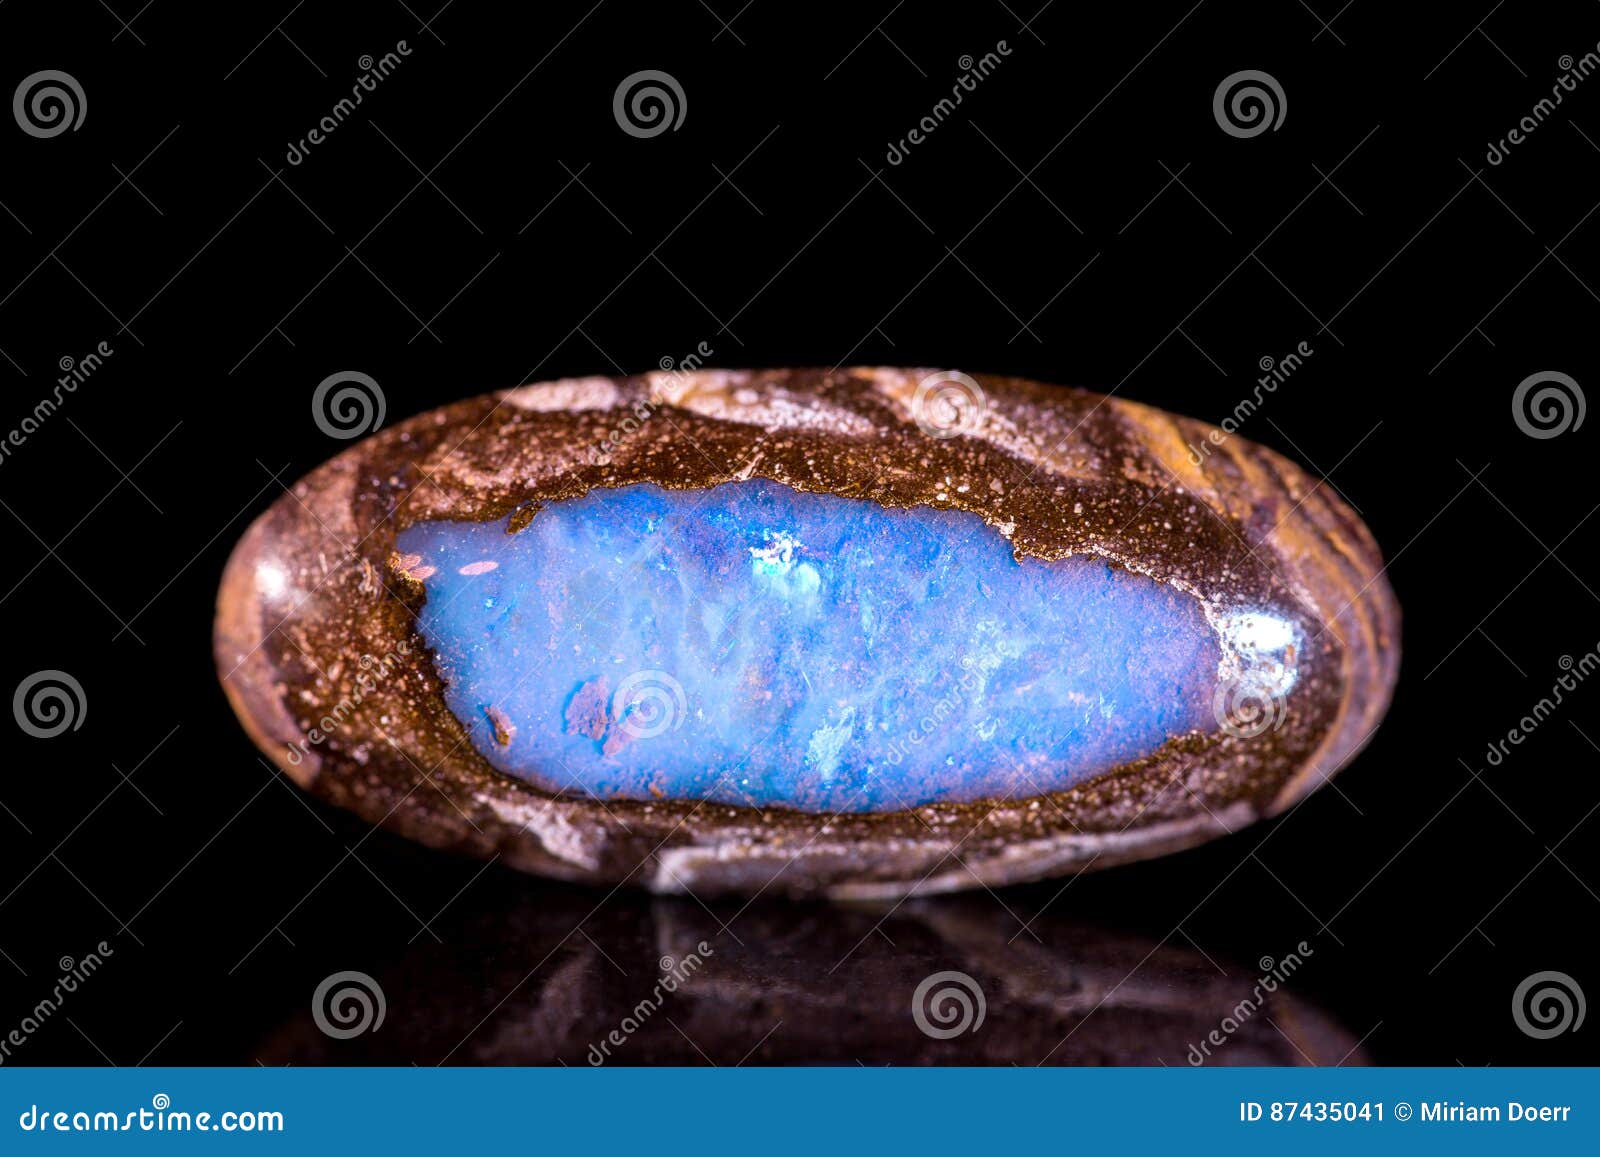 opal between a bedrock, black background, mineral gemstone, heal